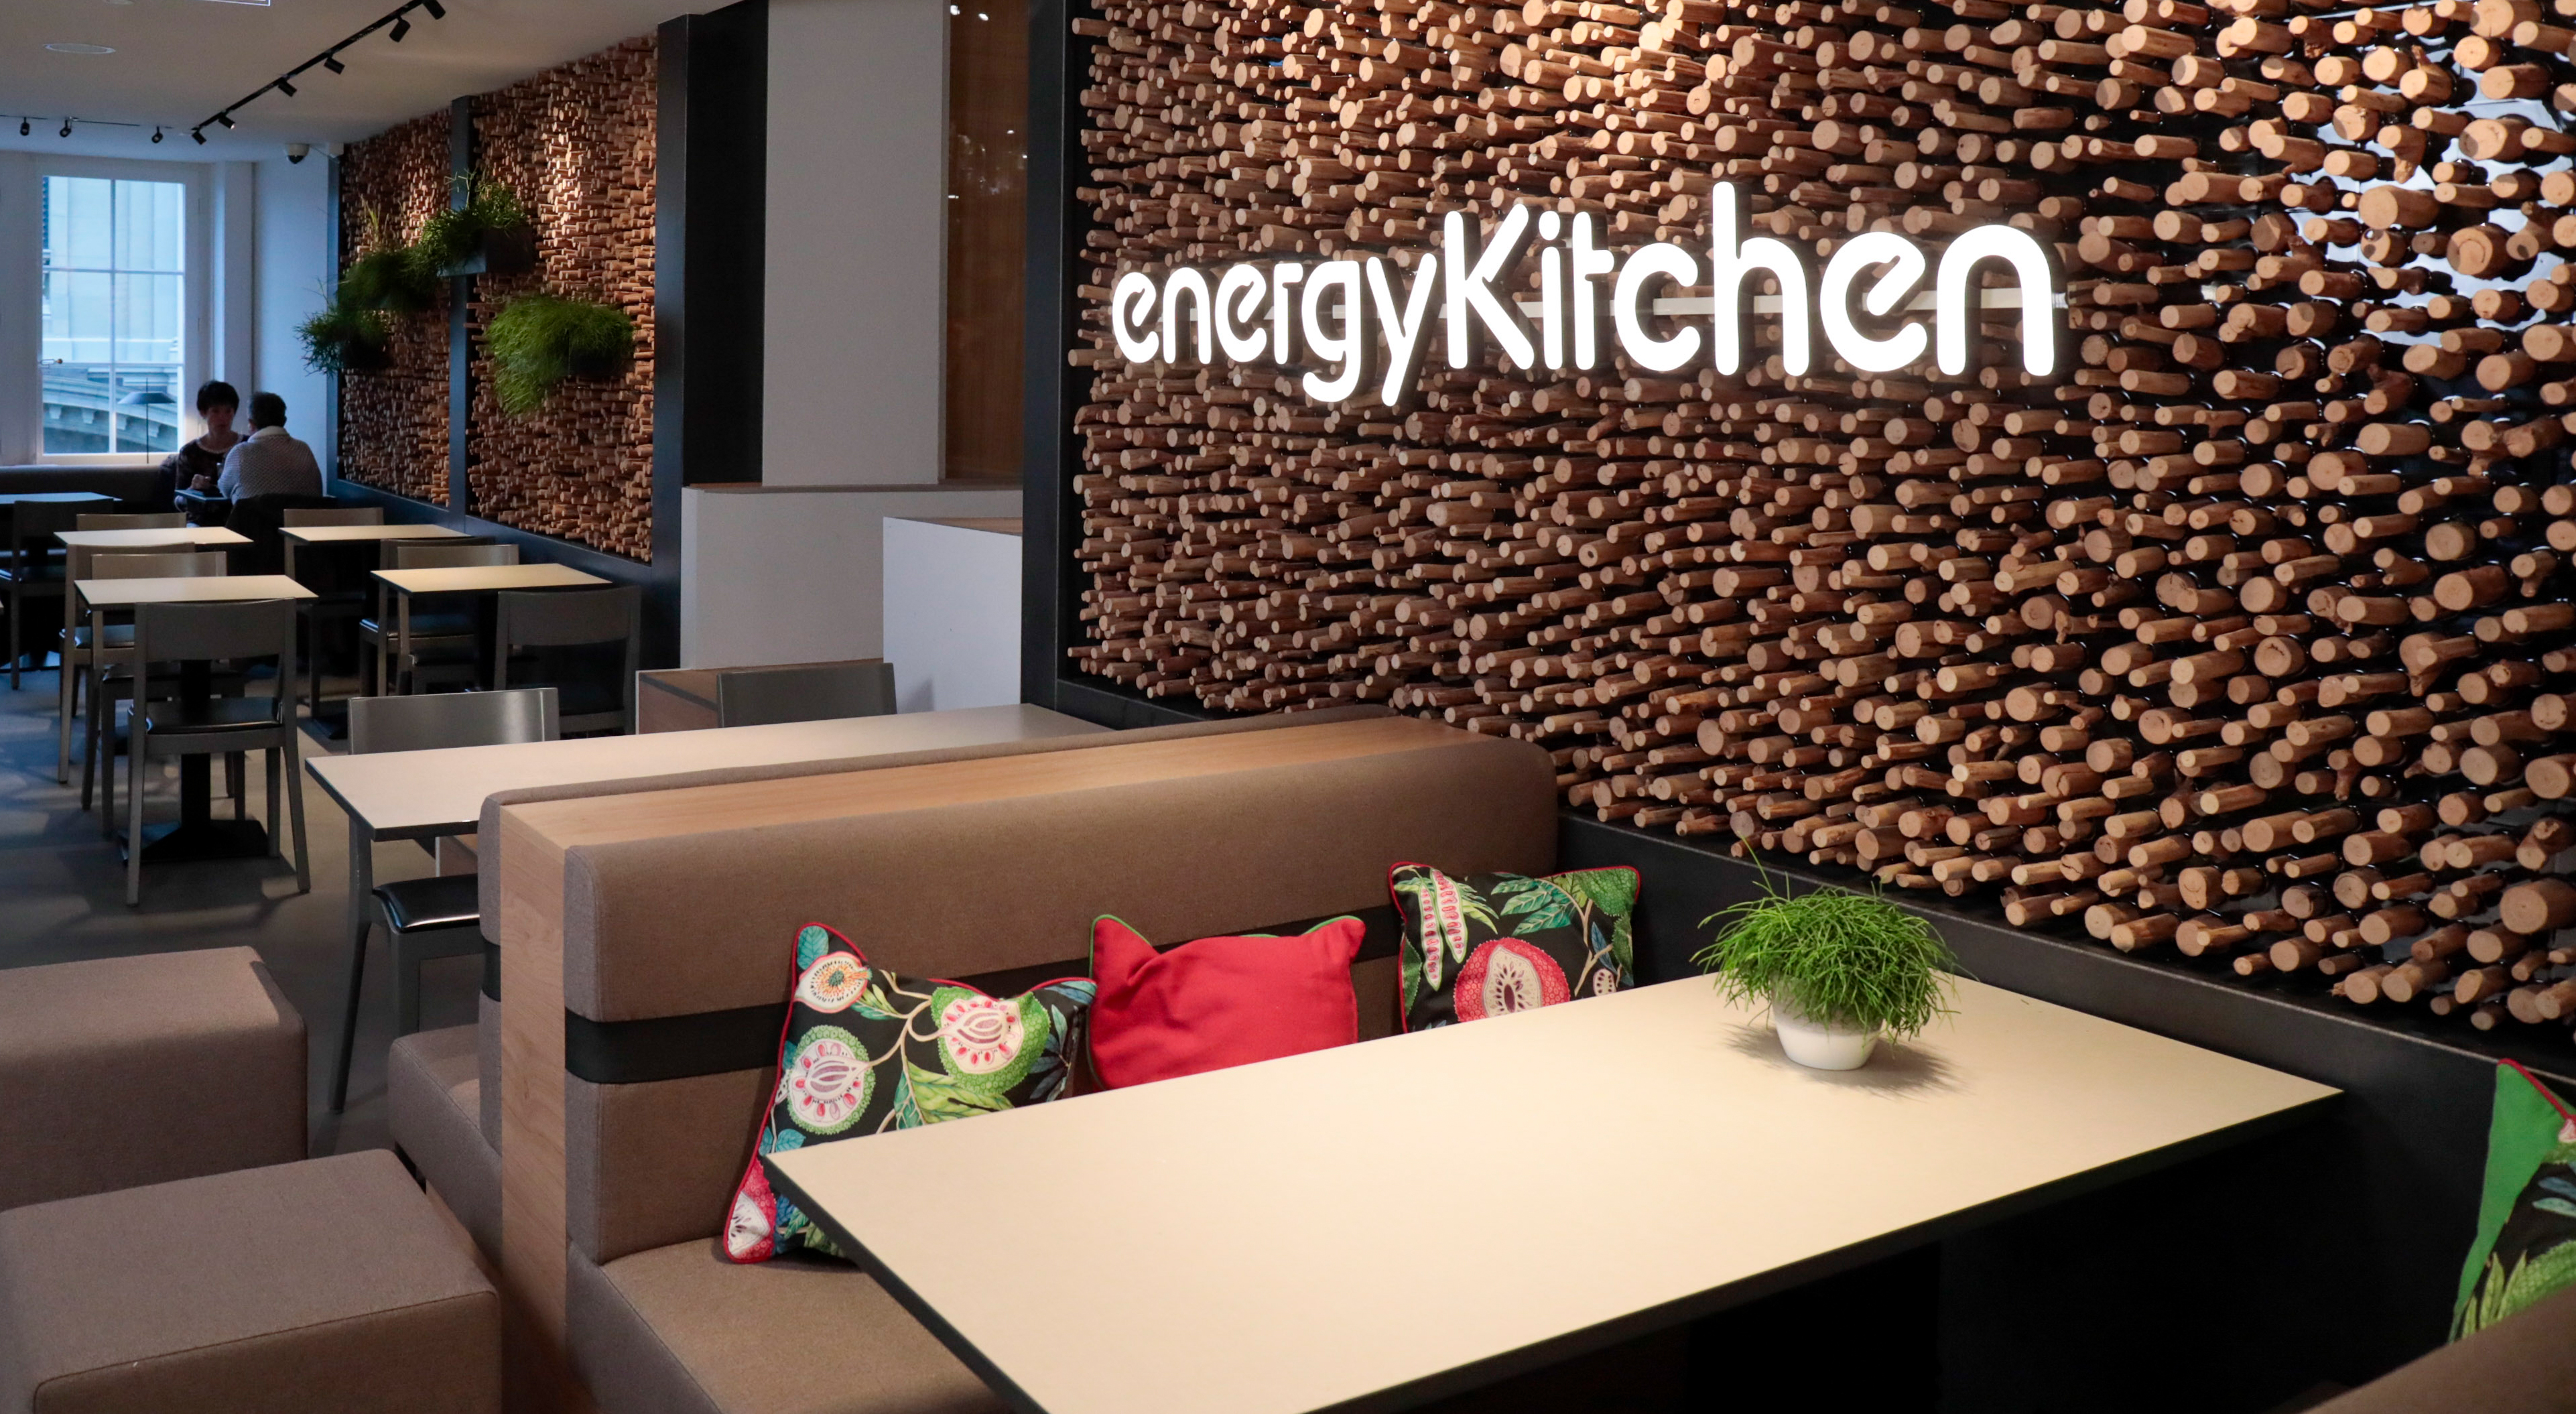 Energy Kitchen Restaurant - neu umgebaut